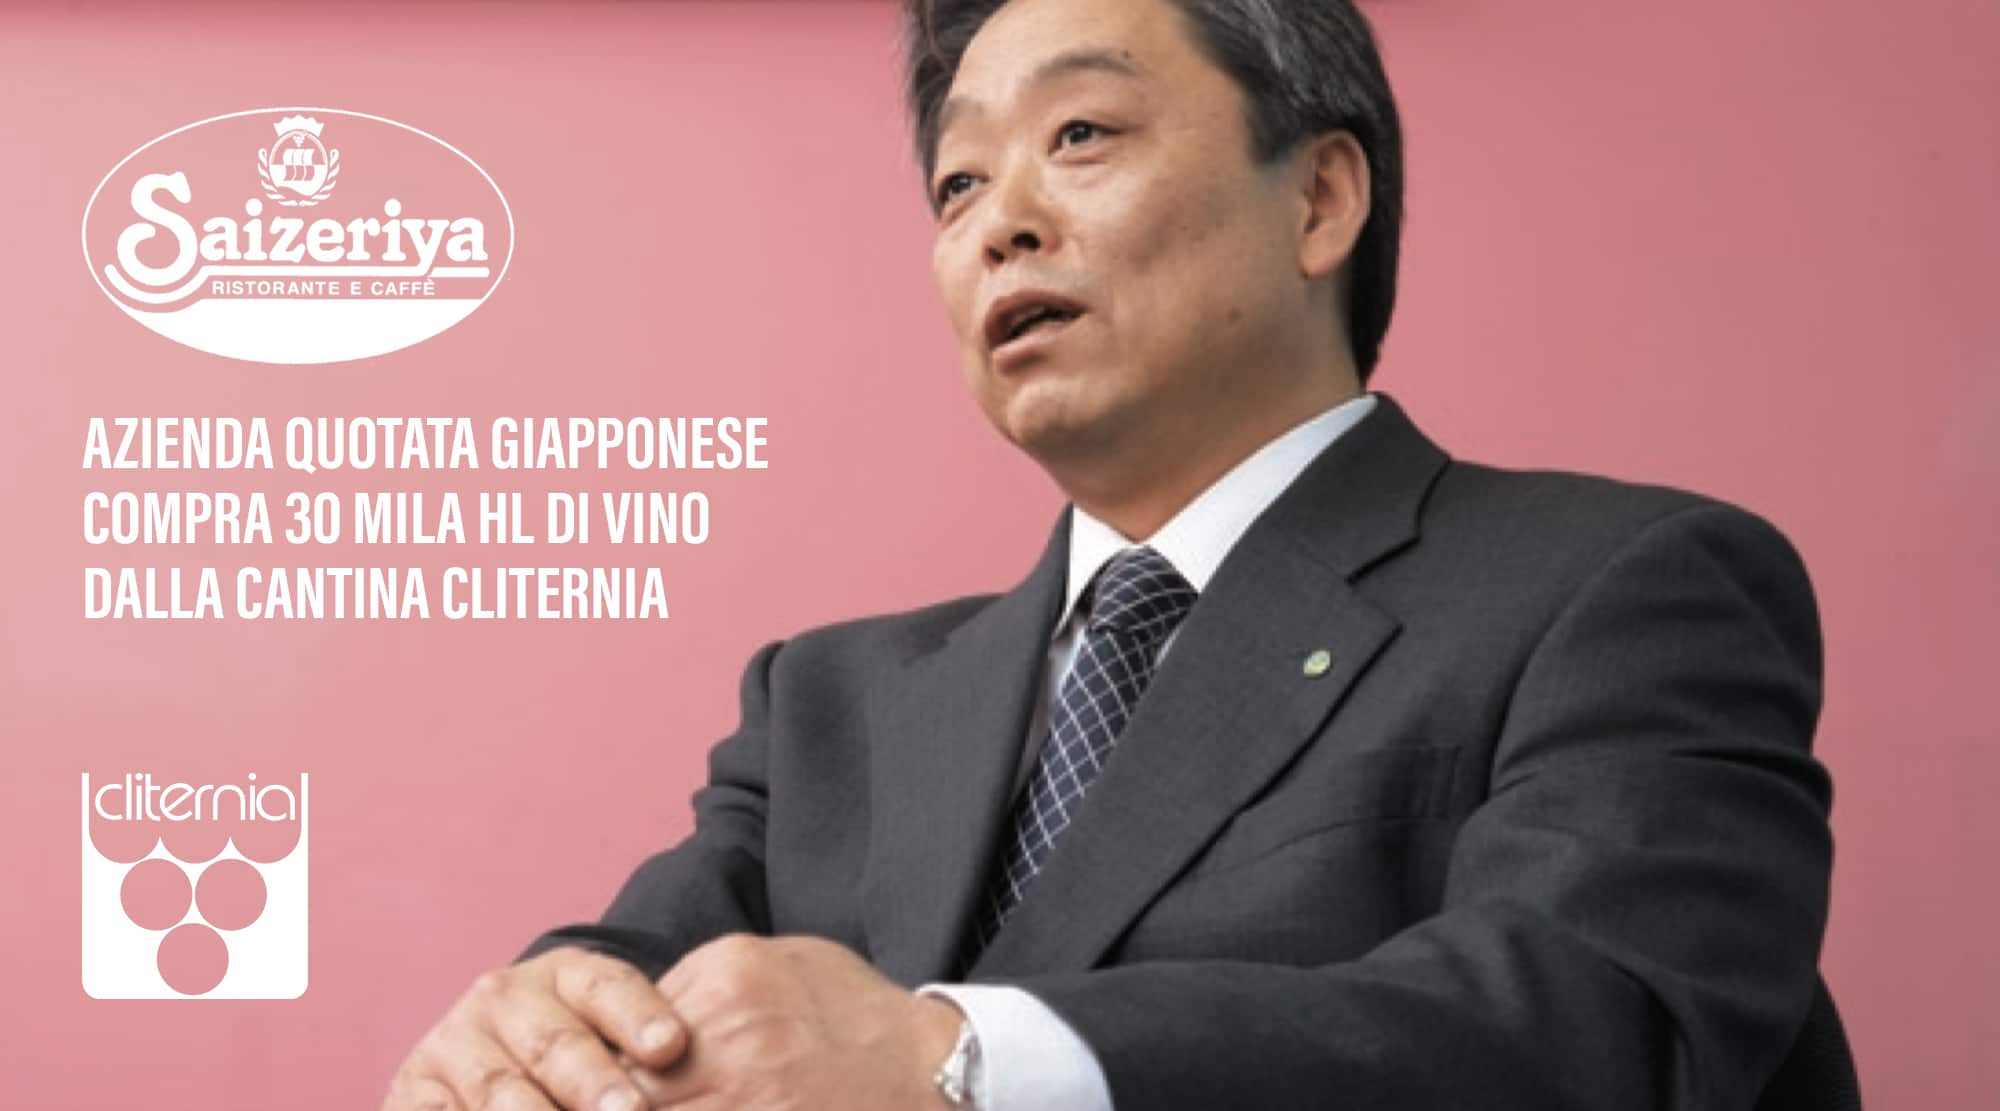 Azienda giapponese visita Cantina Cliternia: Venduti 30mila hl di vino